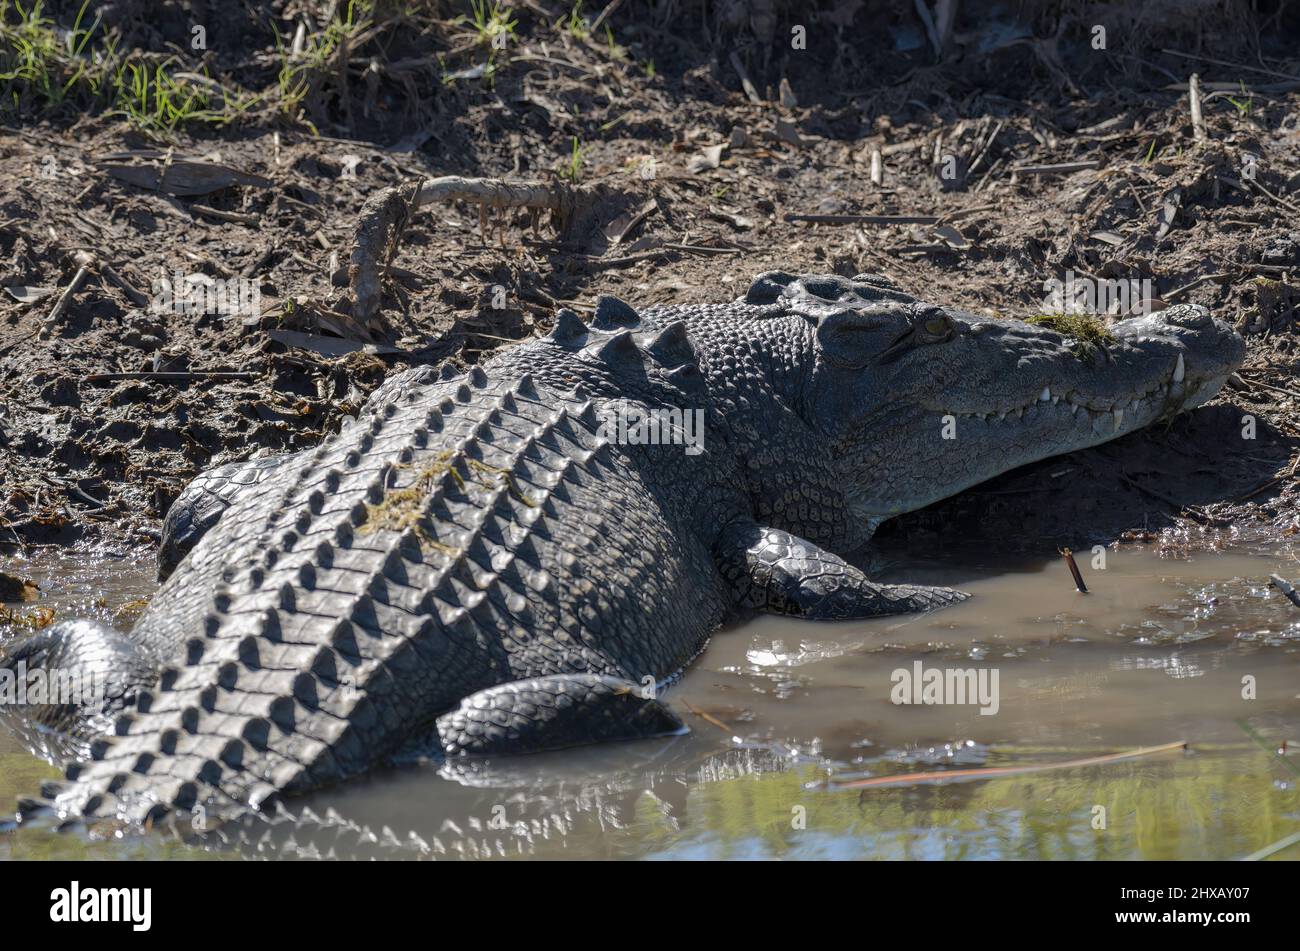 A very large crocodile resting on the banks of the Yellow water billabong, Kakadu, Northern Territory, Australia. Stock Photo